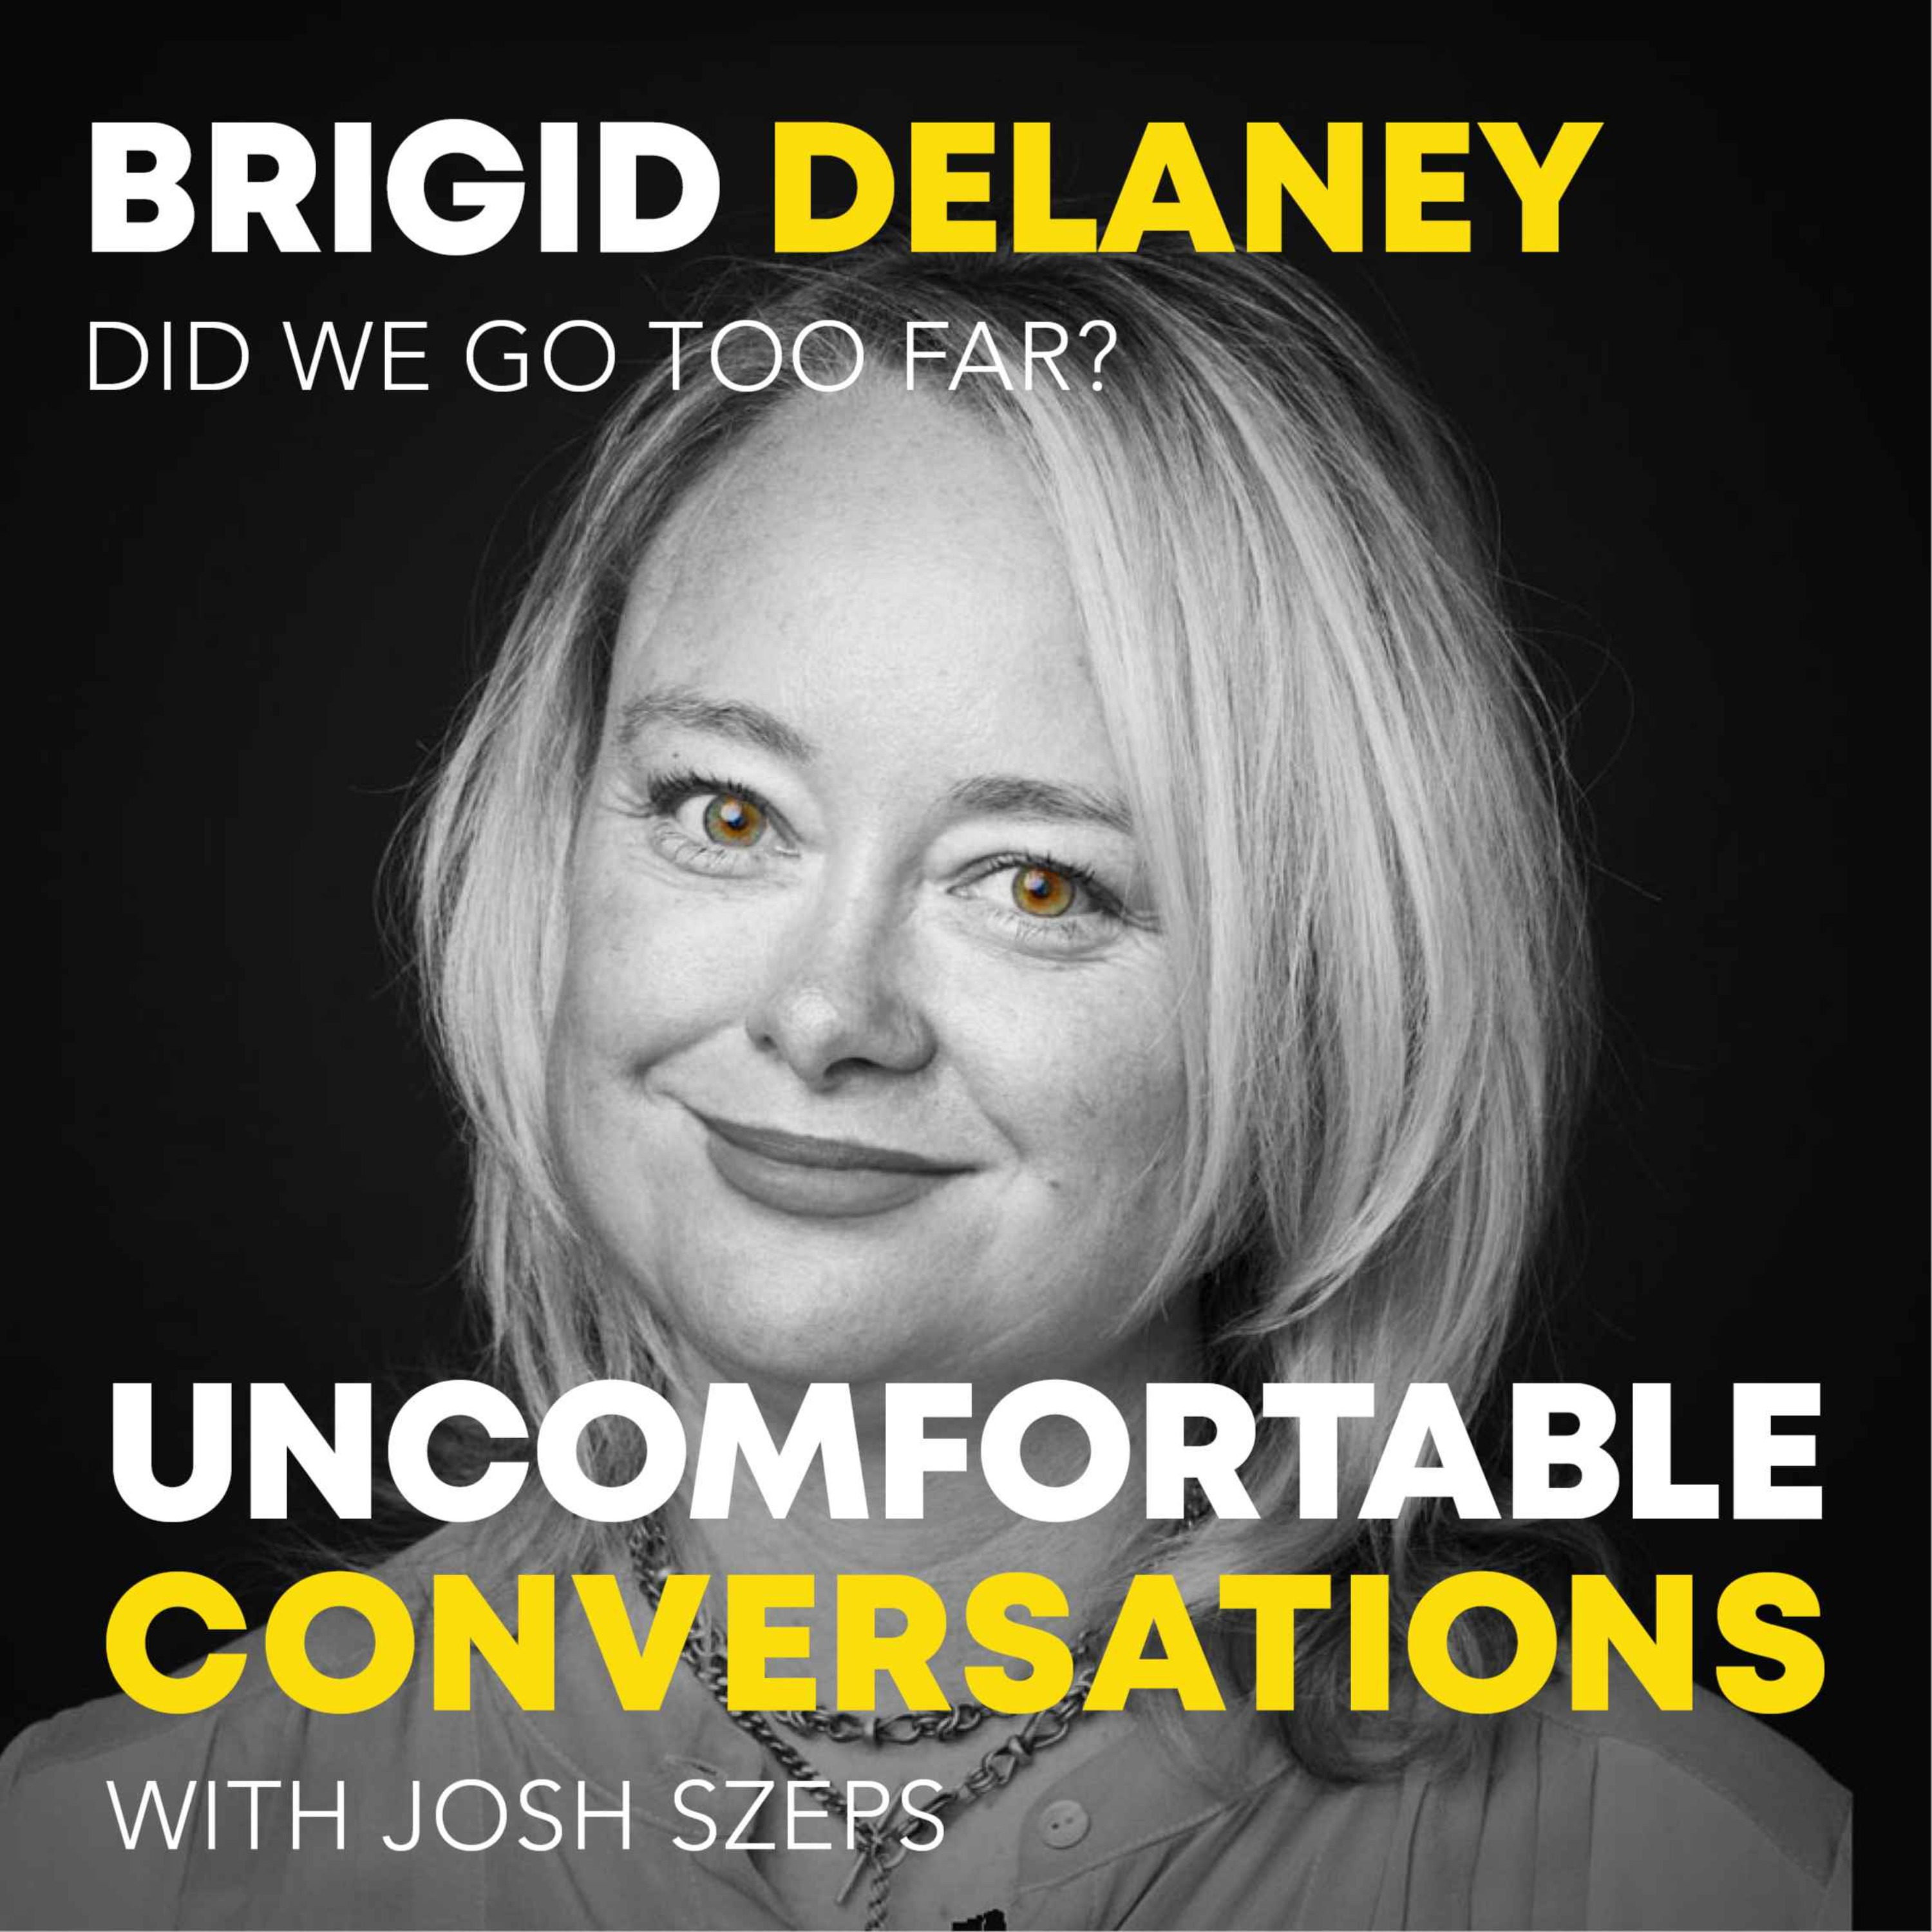 "Did We Go Too Far?" with Brigid Delaney